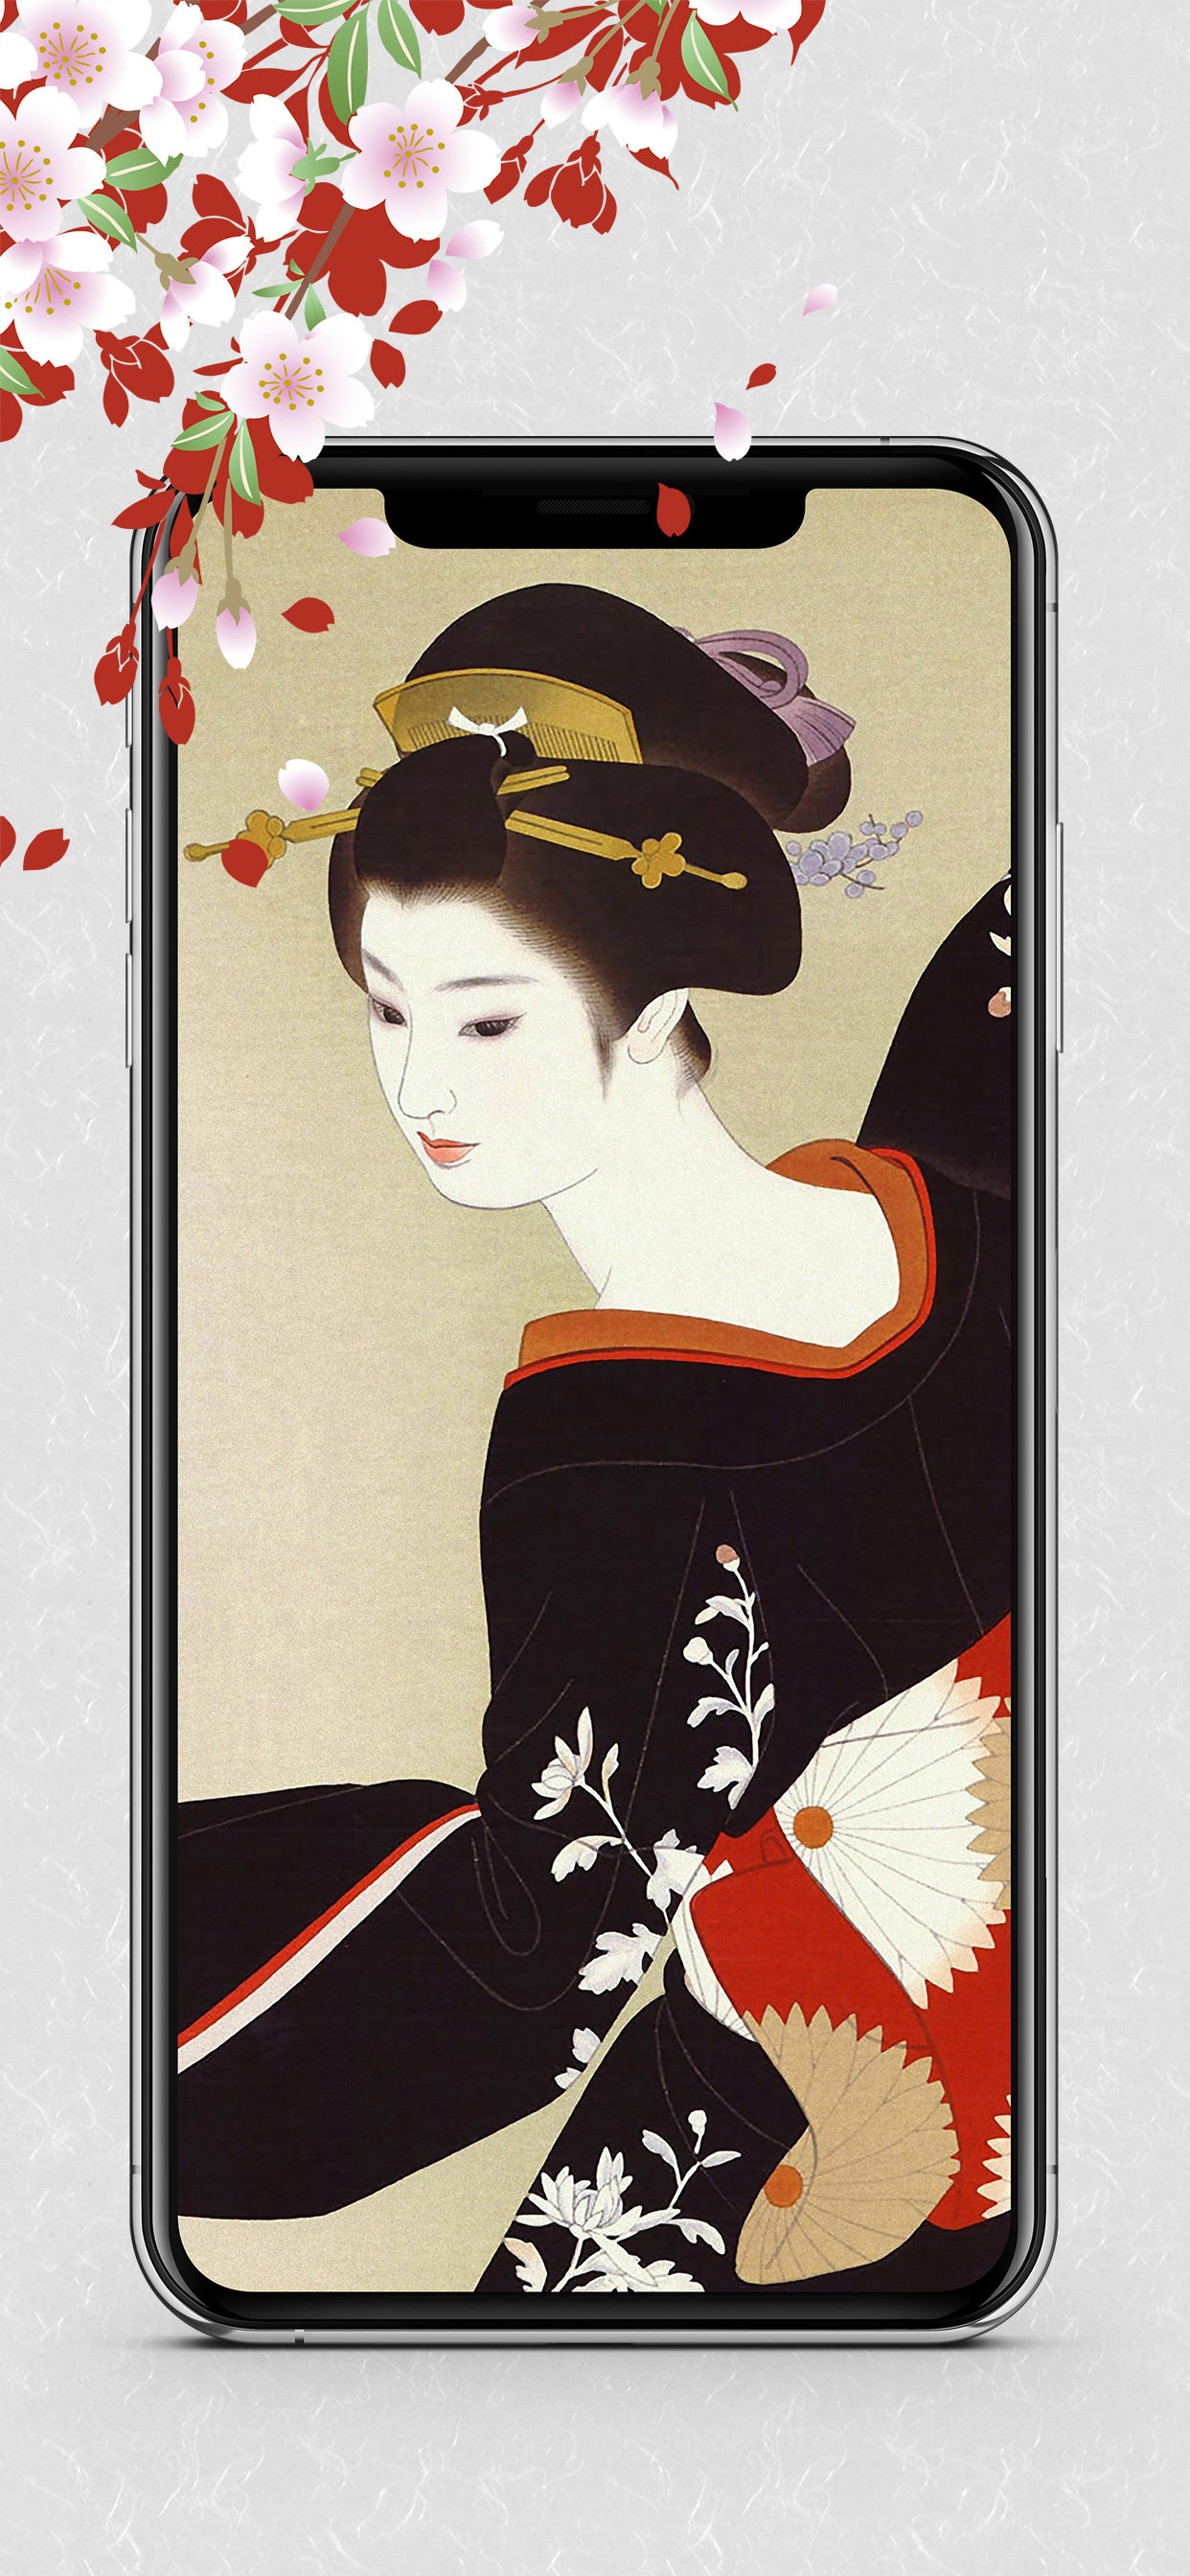 Dolice Design Masaki Hirokawa Portfolio 廣川政樹ポートフォリオ Iphone Android App Ukiyo E